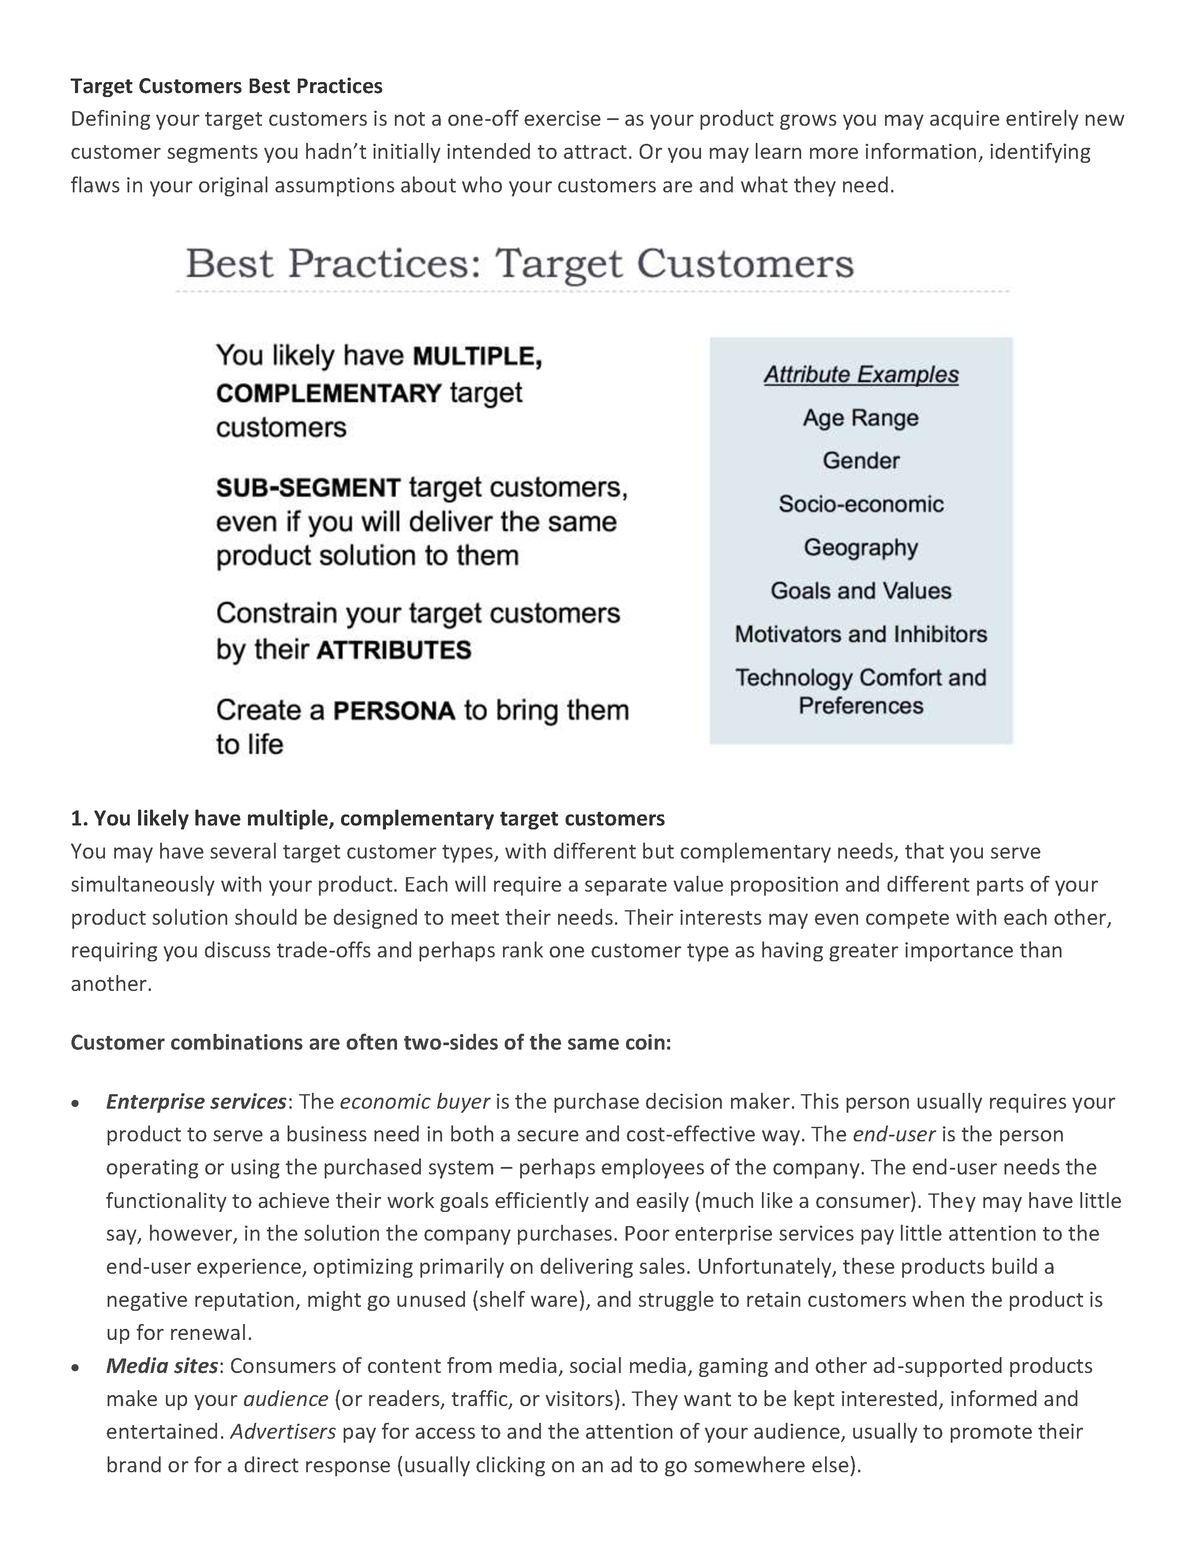 Target Customers Best Practices - Target Customers Best Practices ...